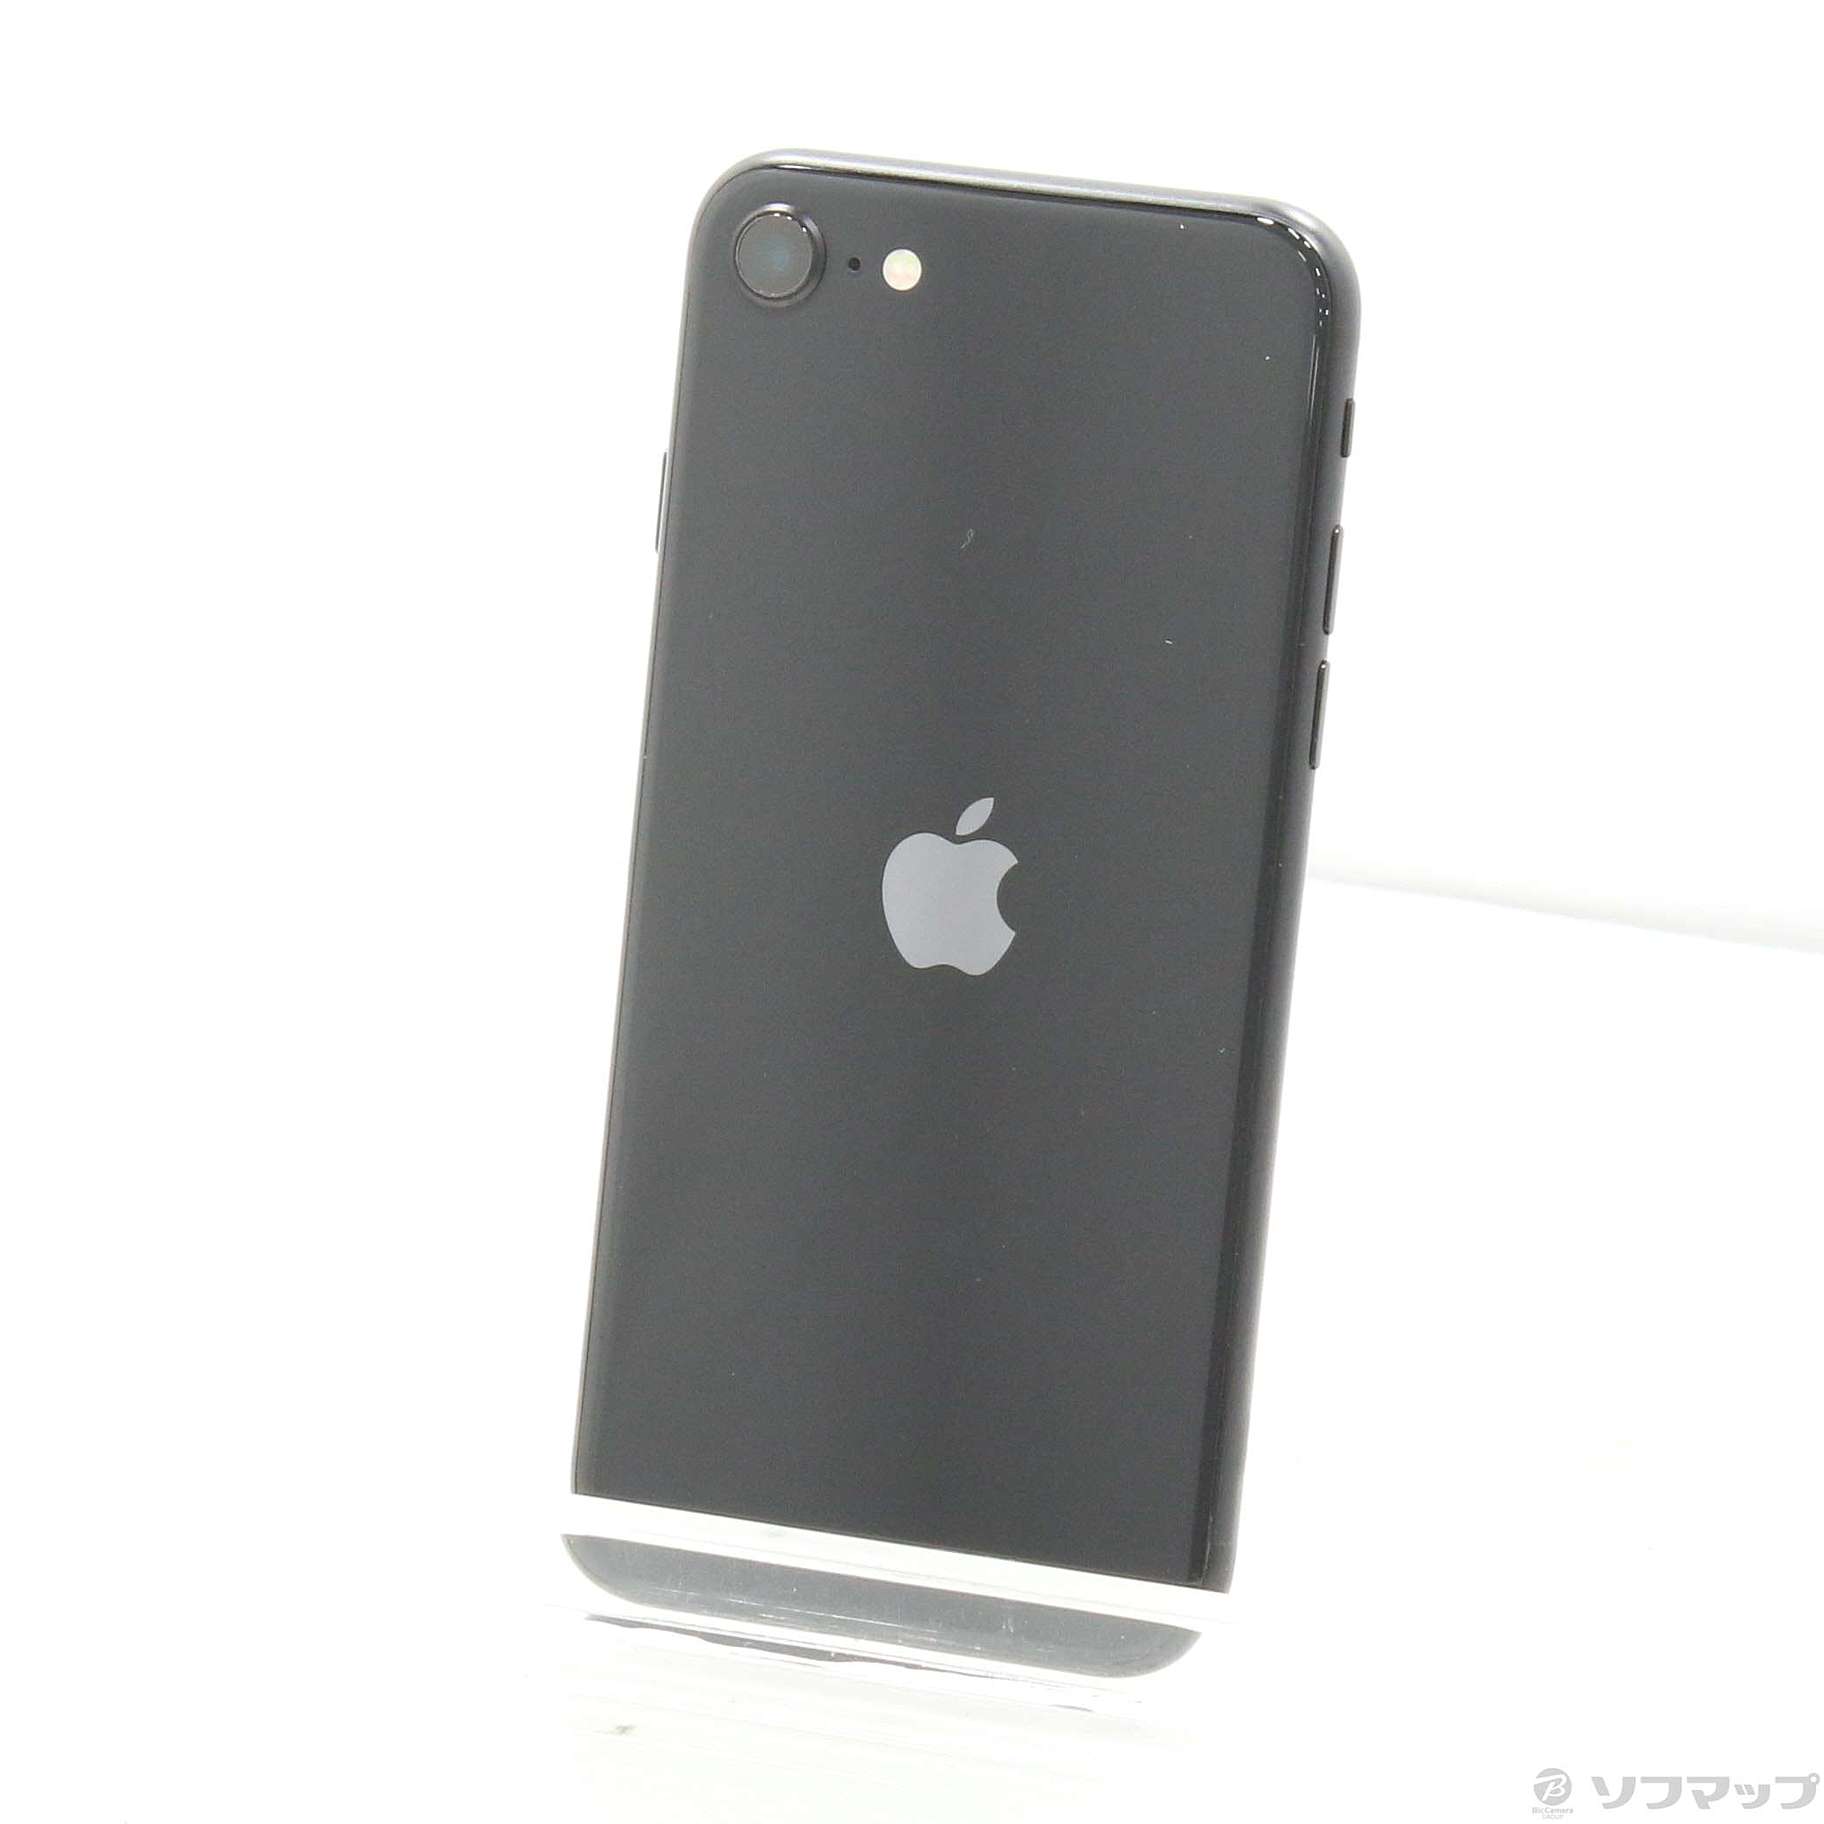 iPhoneSEiPhoneSE 第2世代 ブラック 64GB SIMフリー